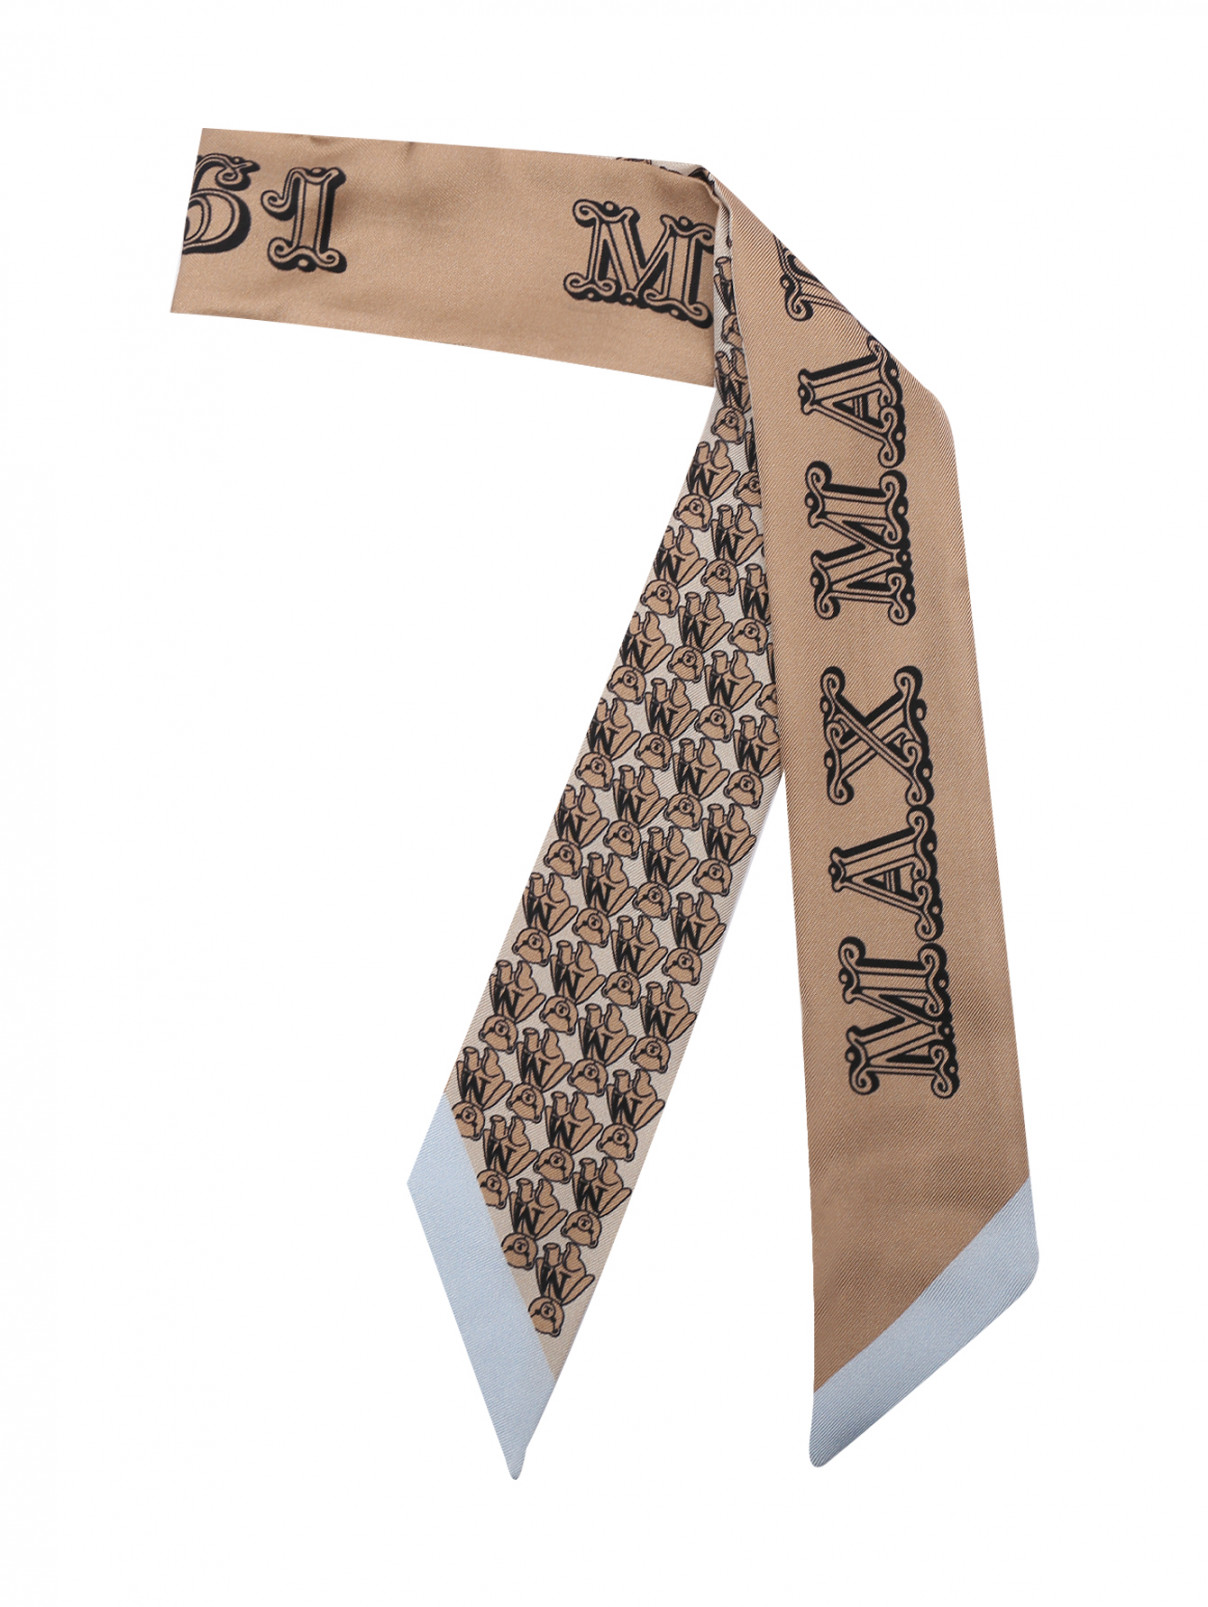 Шарф-галстук из шелка Max Mara  –  Общий вид  – Цвет:  Бежевый